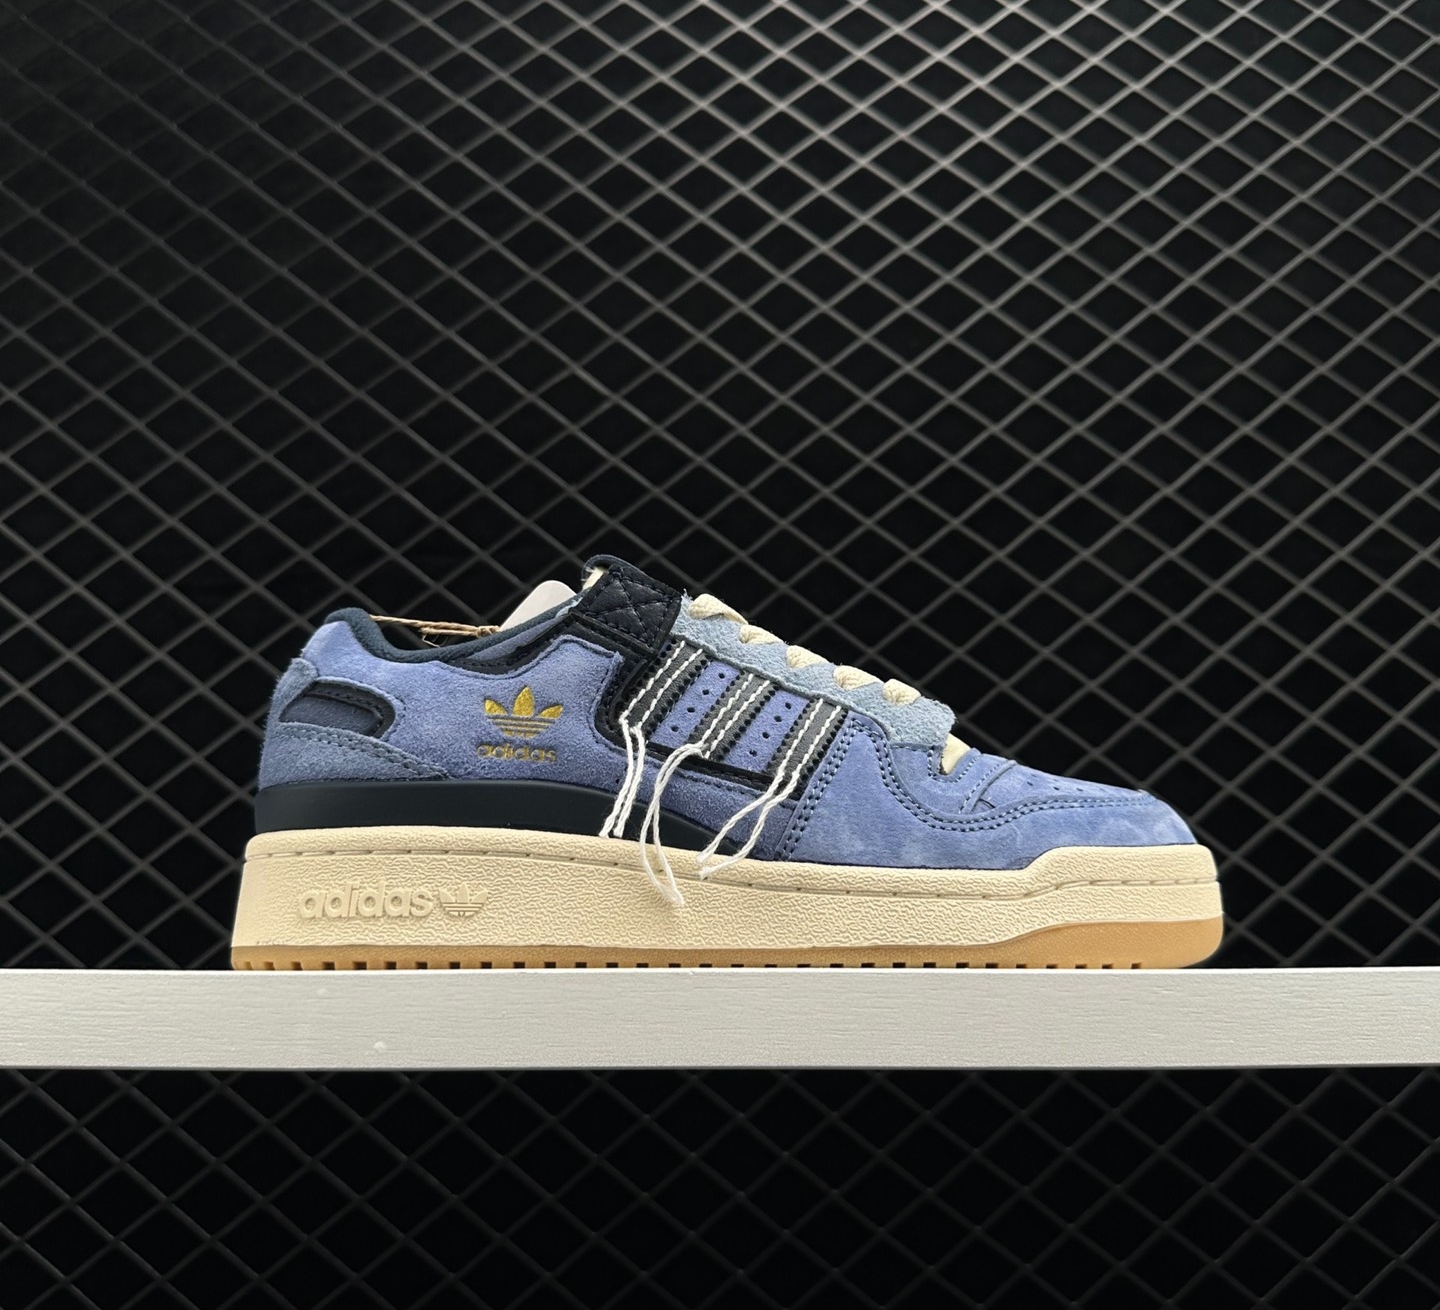 Adidas Originals Forum 84 Low Blue GW0298 - Sleek Retro Sneakers